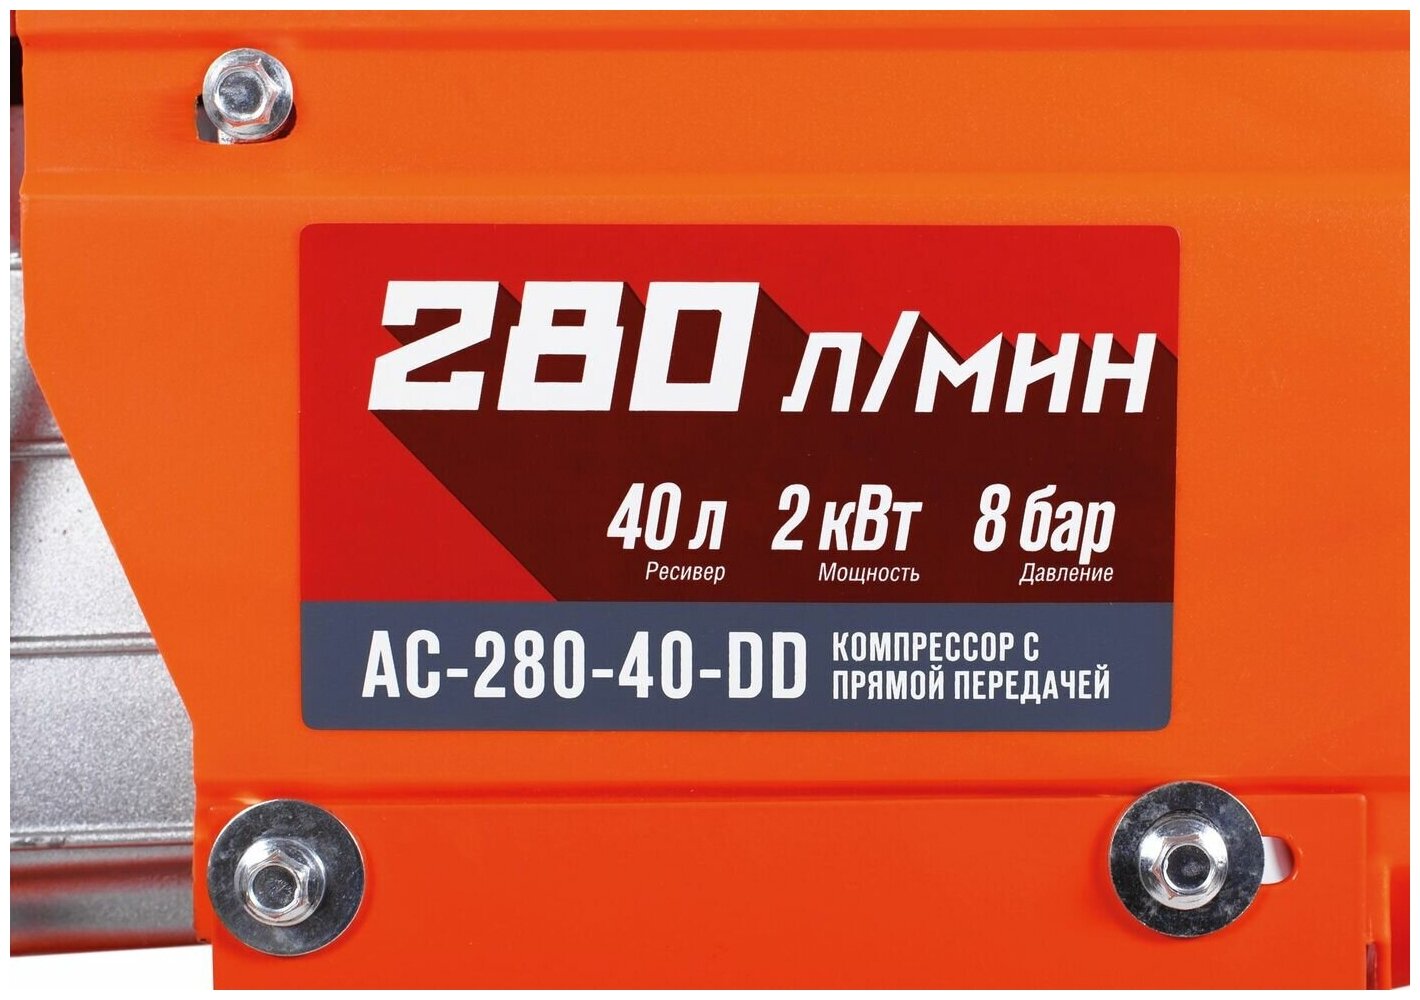 Компрессор масляный Кратон AC-280-40-DD 40 л 2 кВт